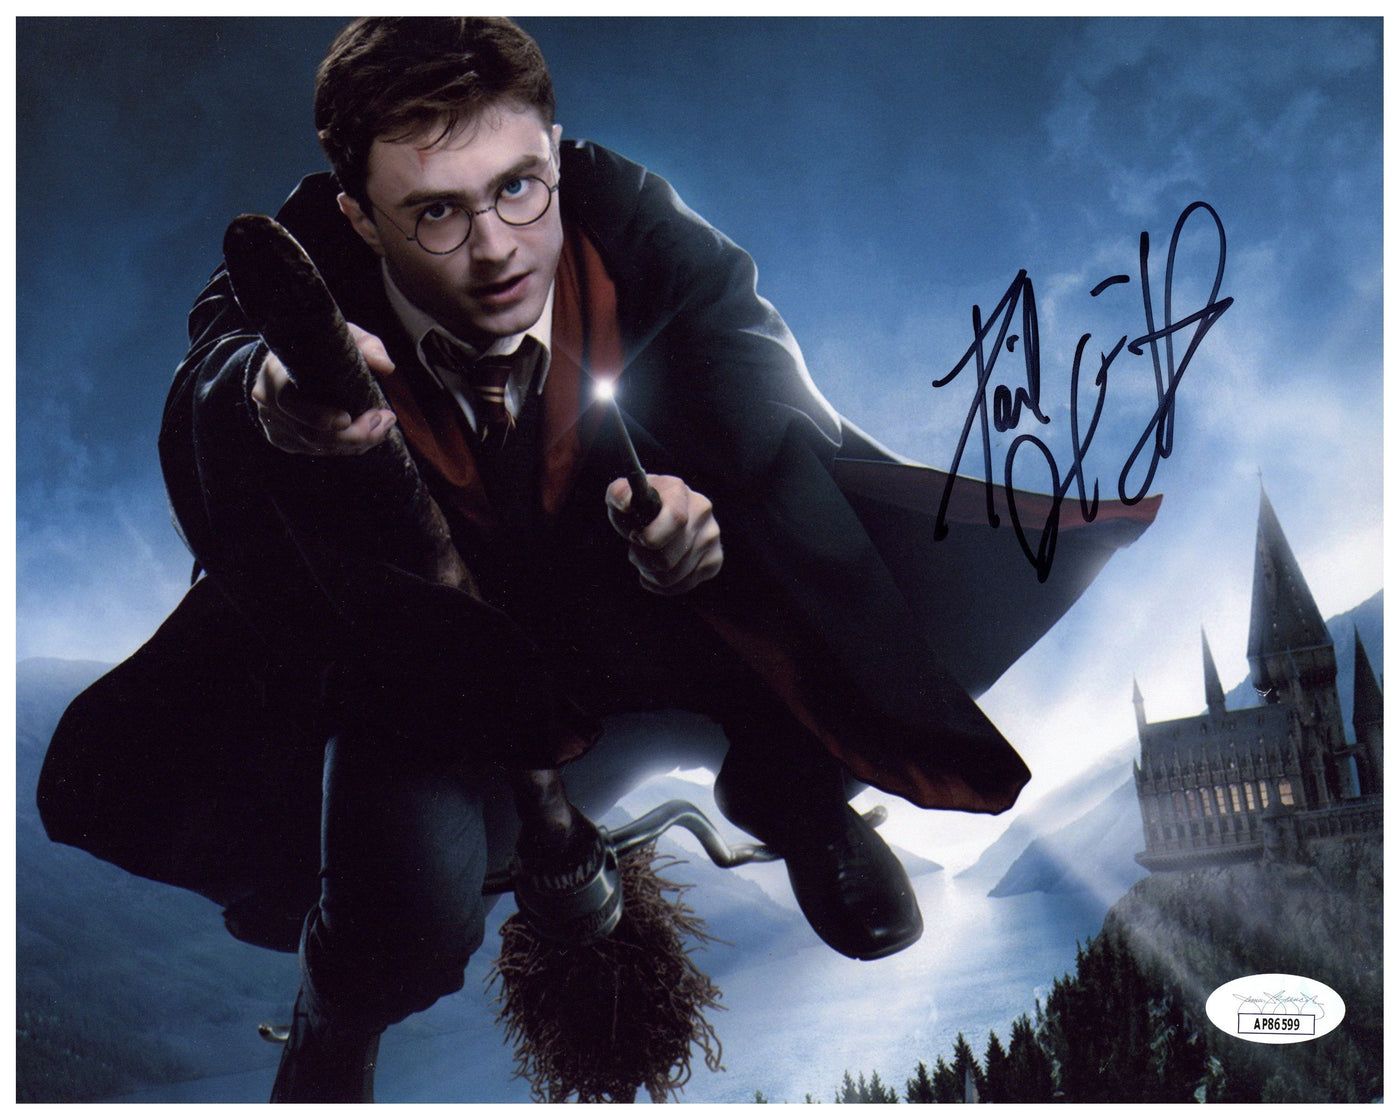 Daniel Radcliffe Signed 8x10 Photo Harry Potter Autographed JSA COA